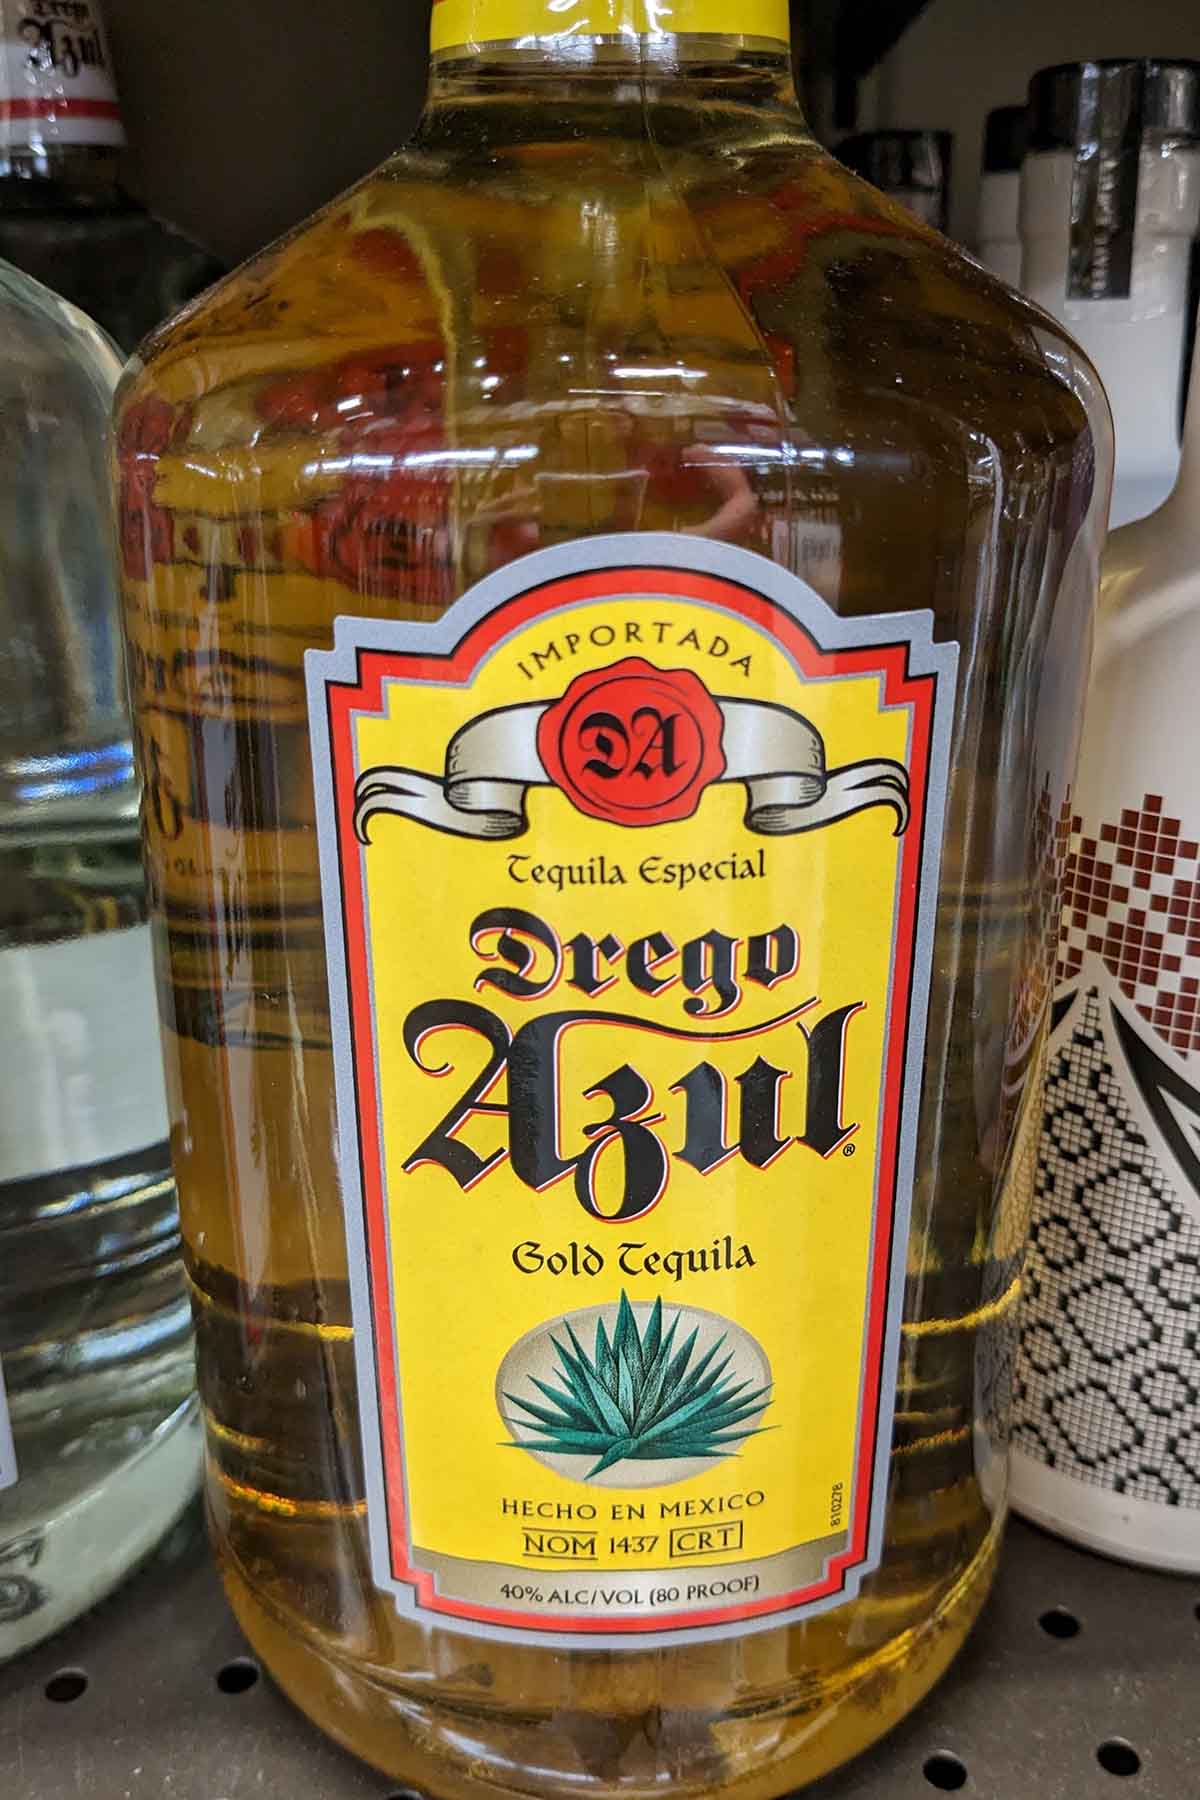 bottle of Drego Azul gold tequila.